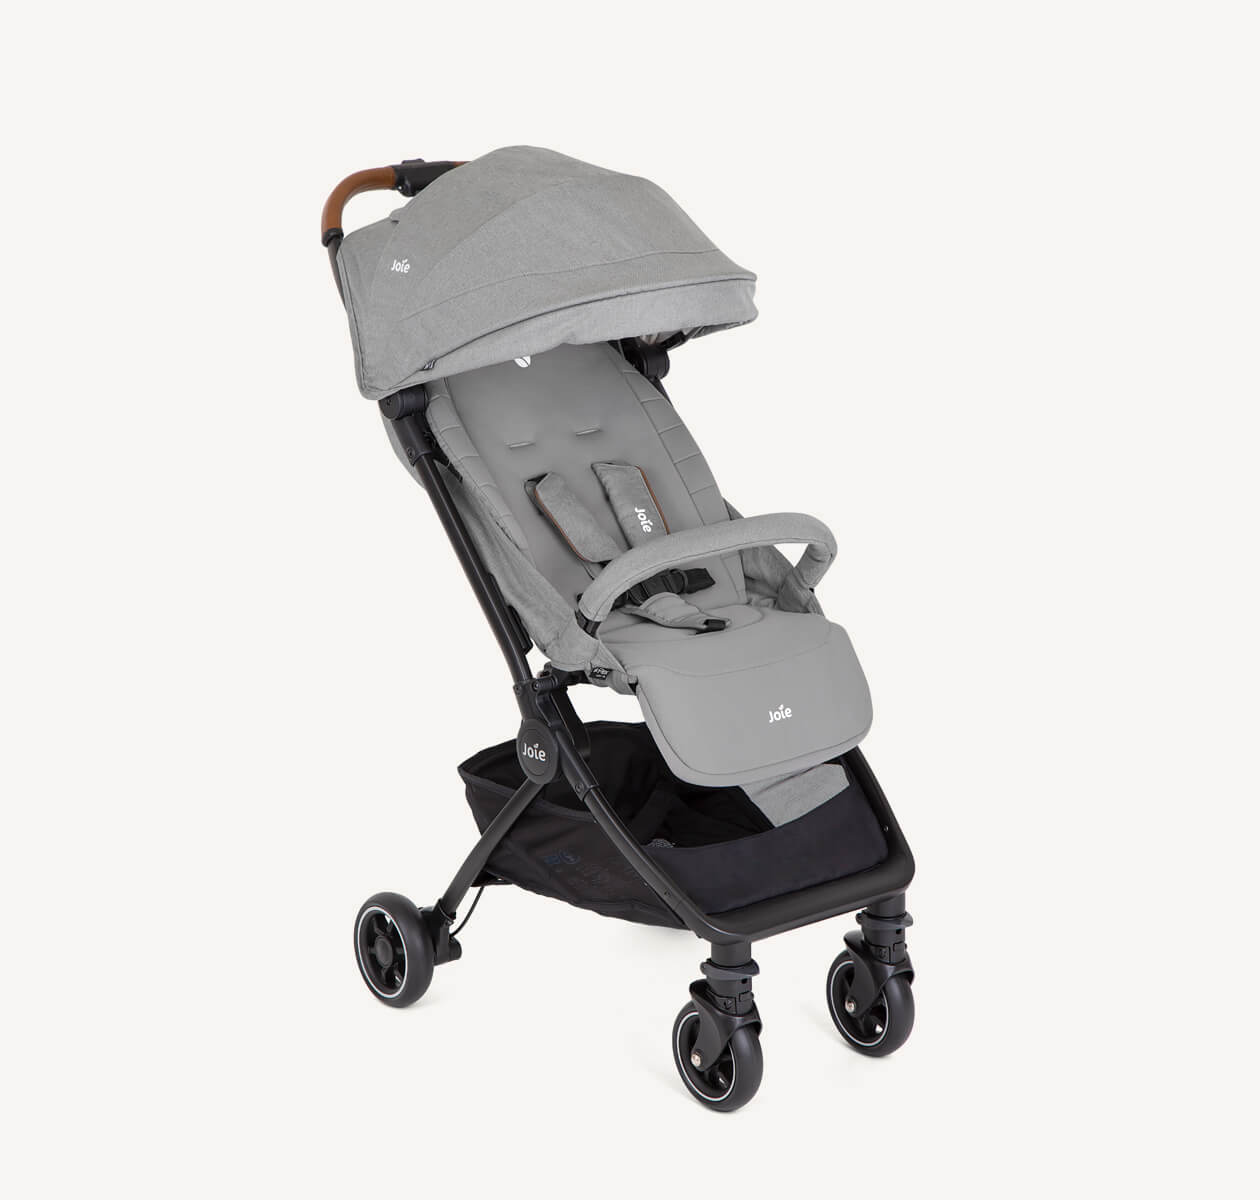   Joie lightweight stroller pact flex in light gray at an angle.